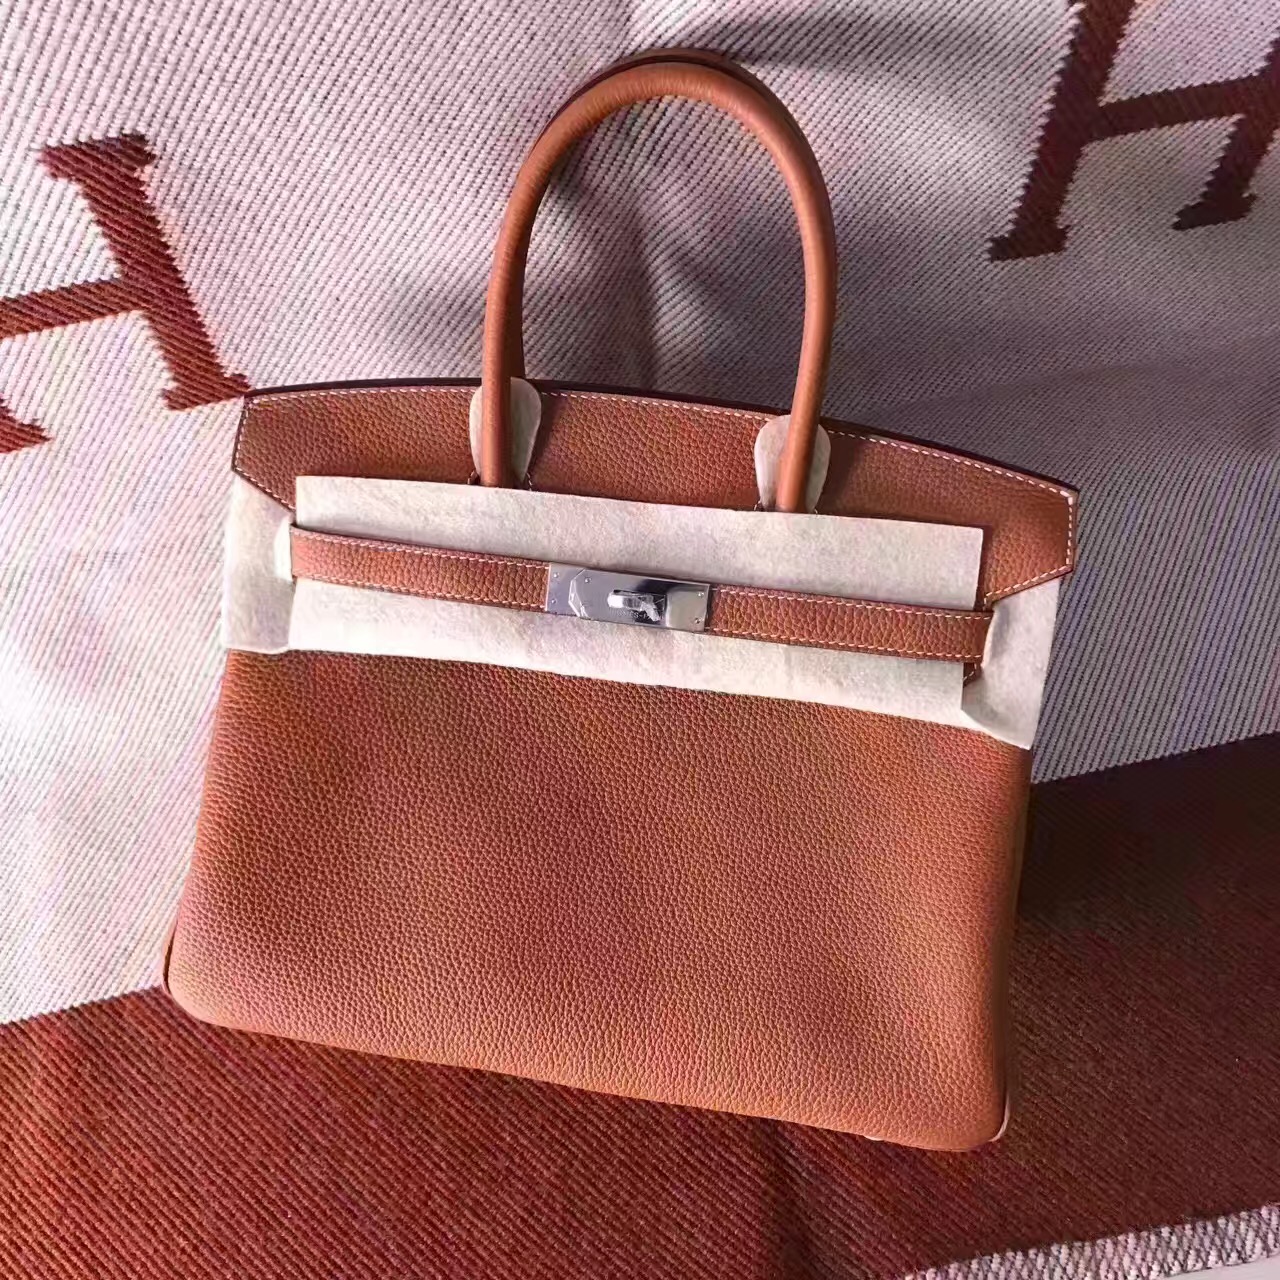 Hermes Birkin top leather orange handbags